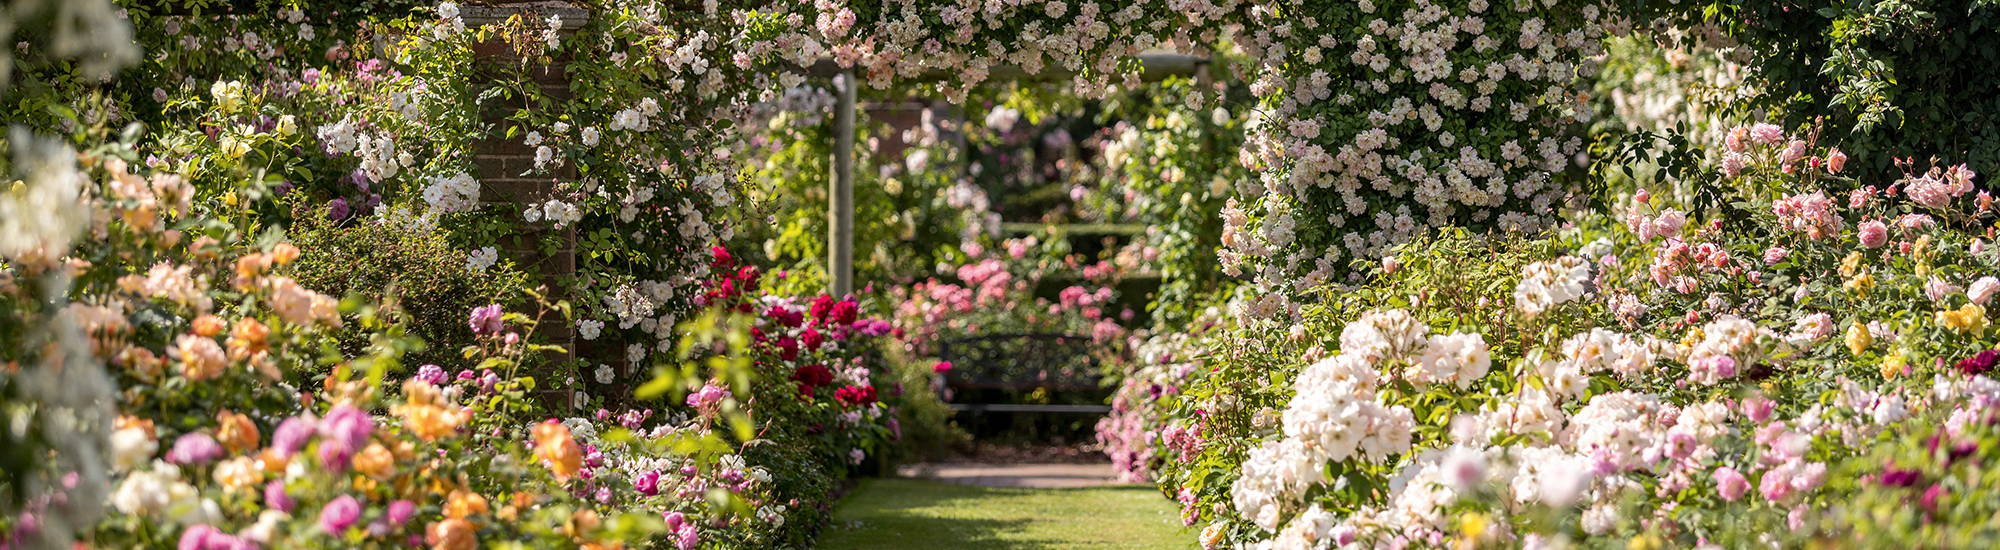 David austin rose garden and plant centre